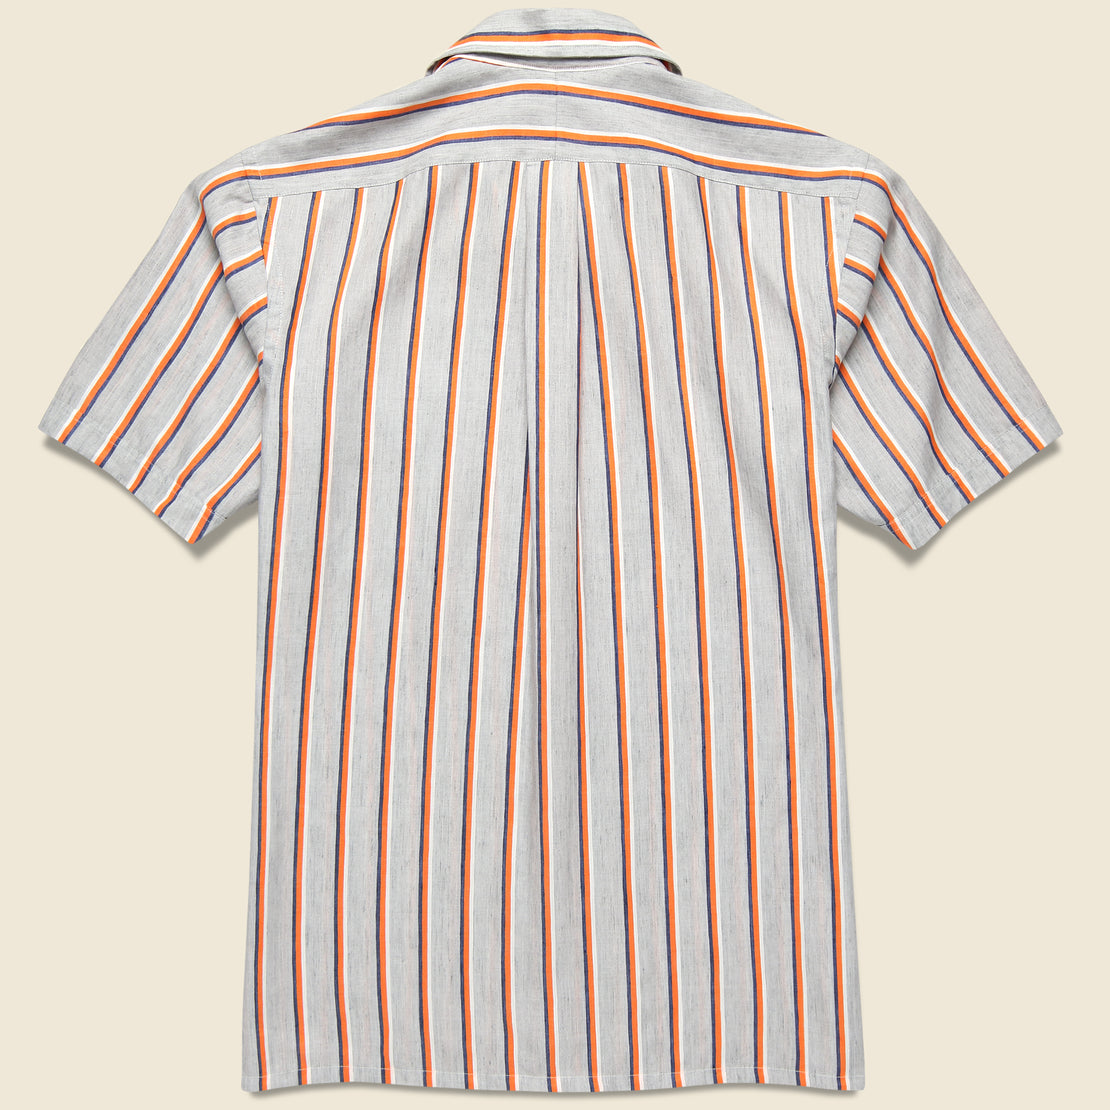 Textured Stripe Shirt - Grey/Orange - Hamilton Shirt Co. - STAG Provisions - Tops - S/S Woven - Stripe